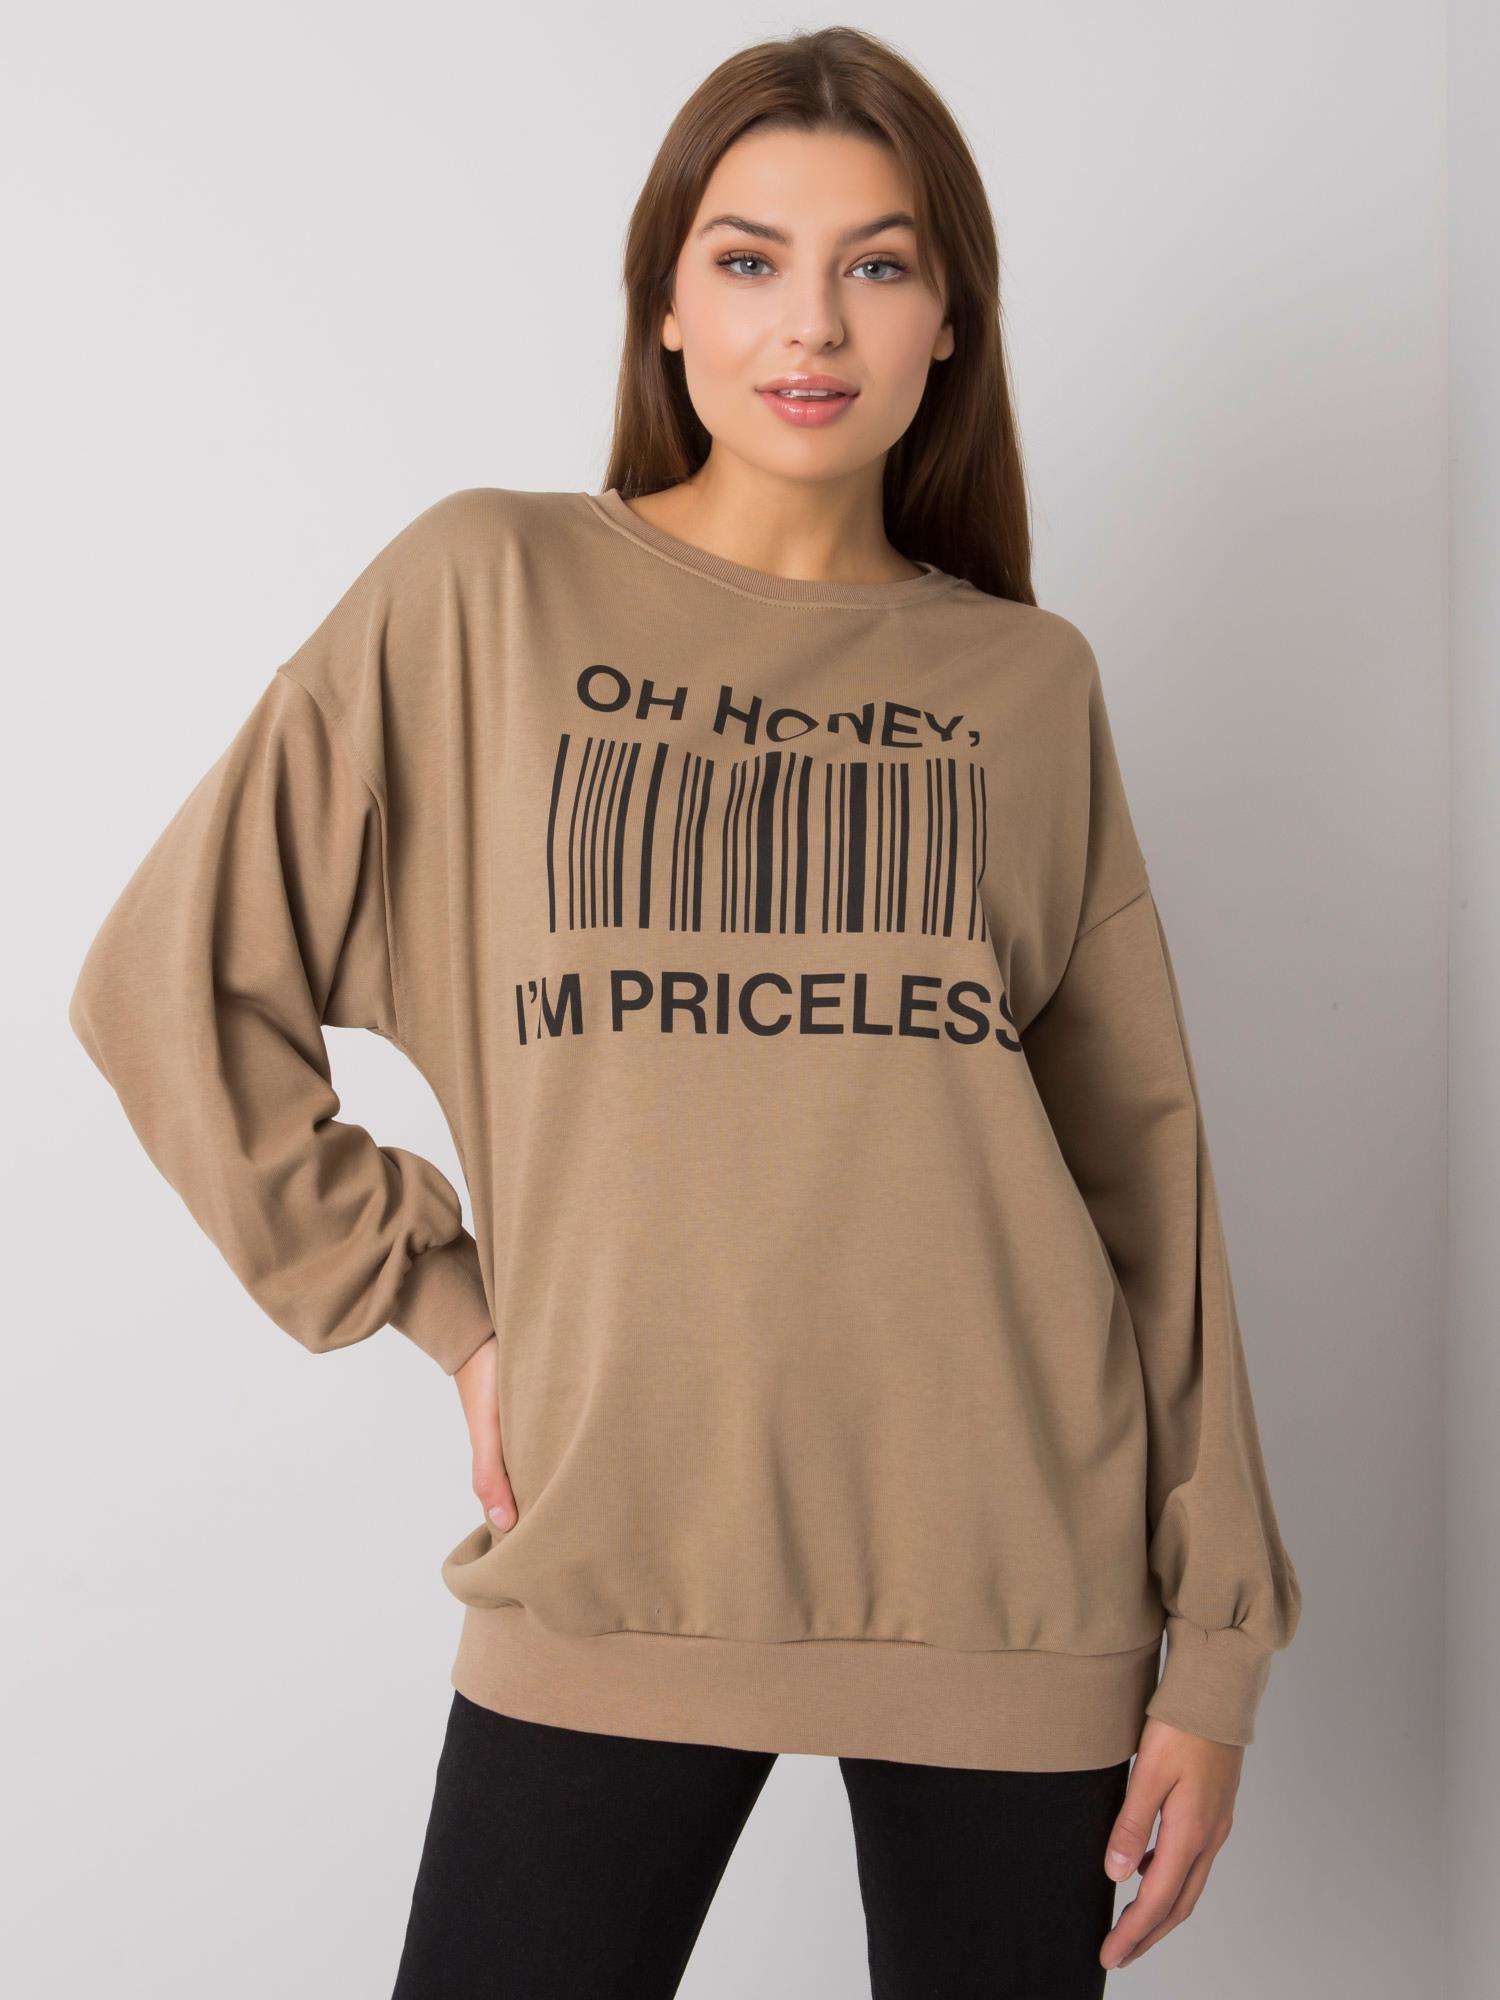 Sweatshirt in Dunkelbeige mit Frontprint